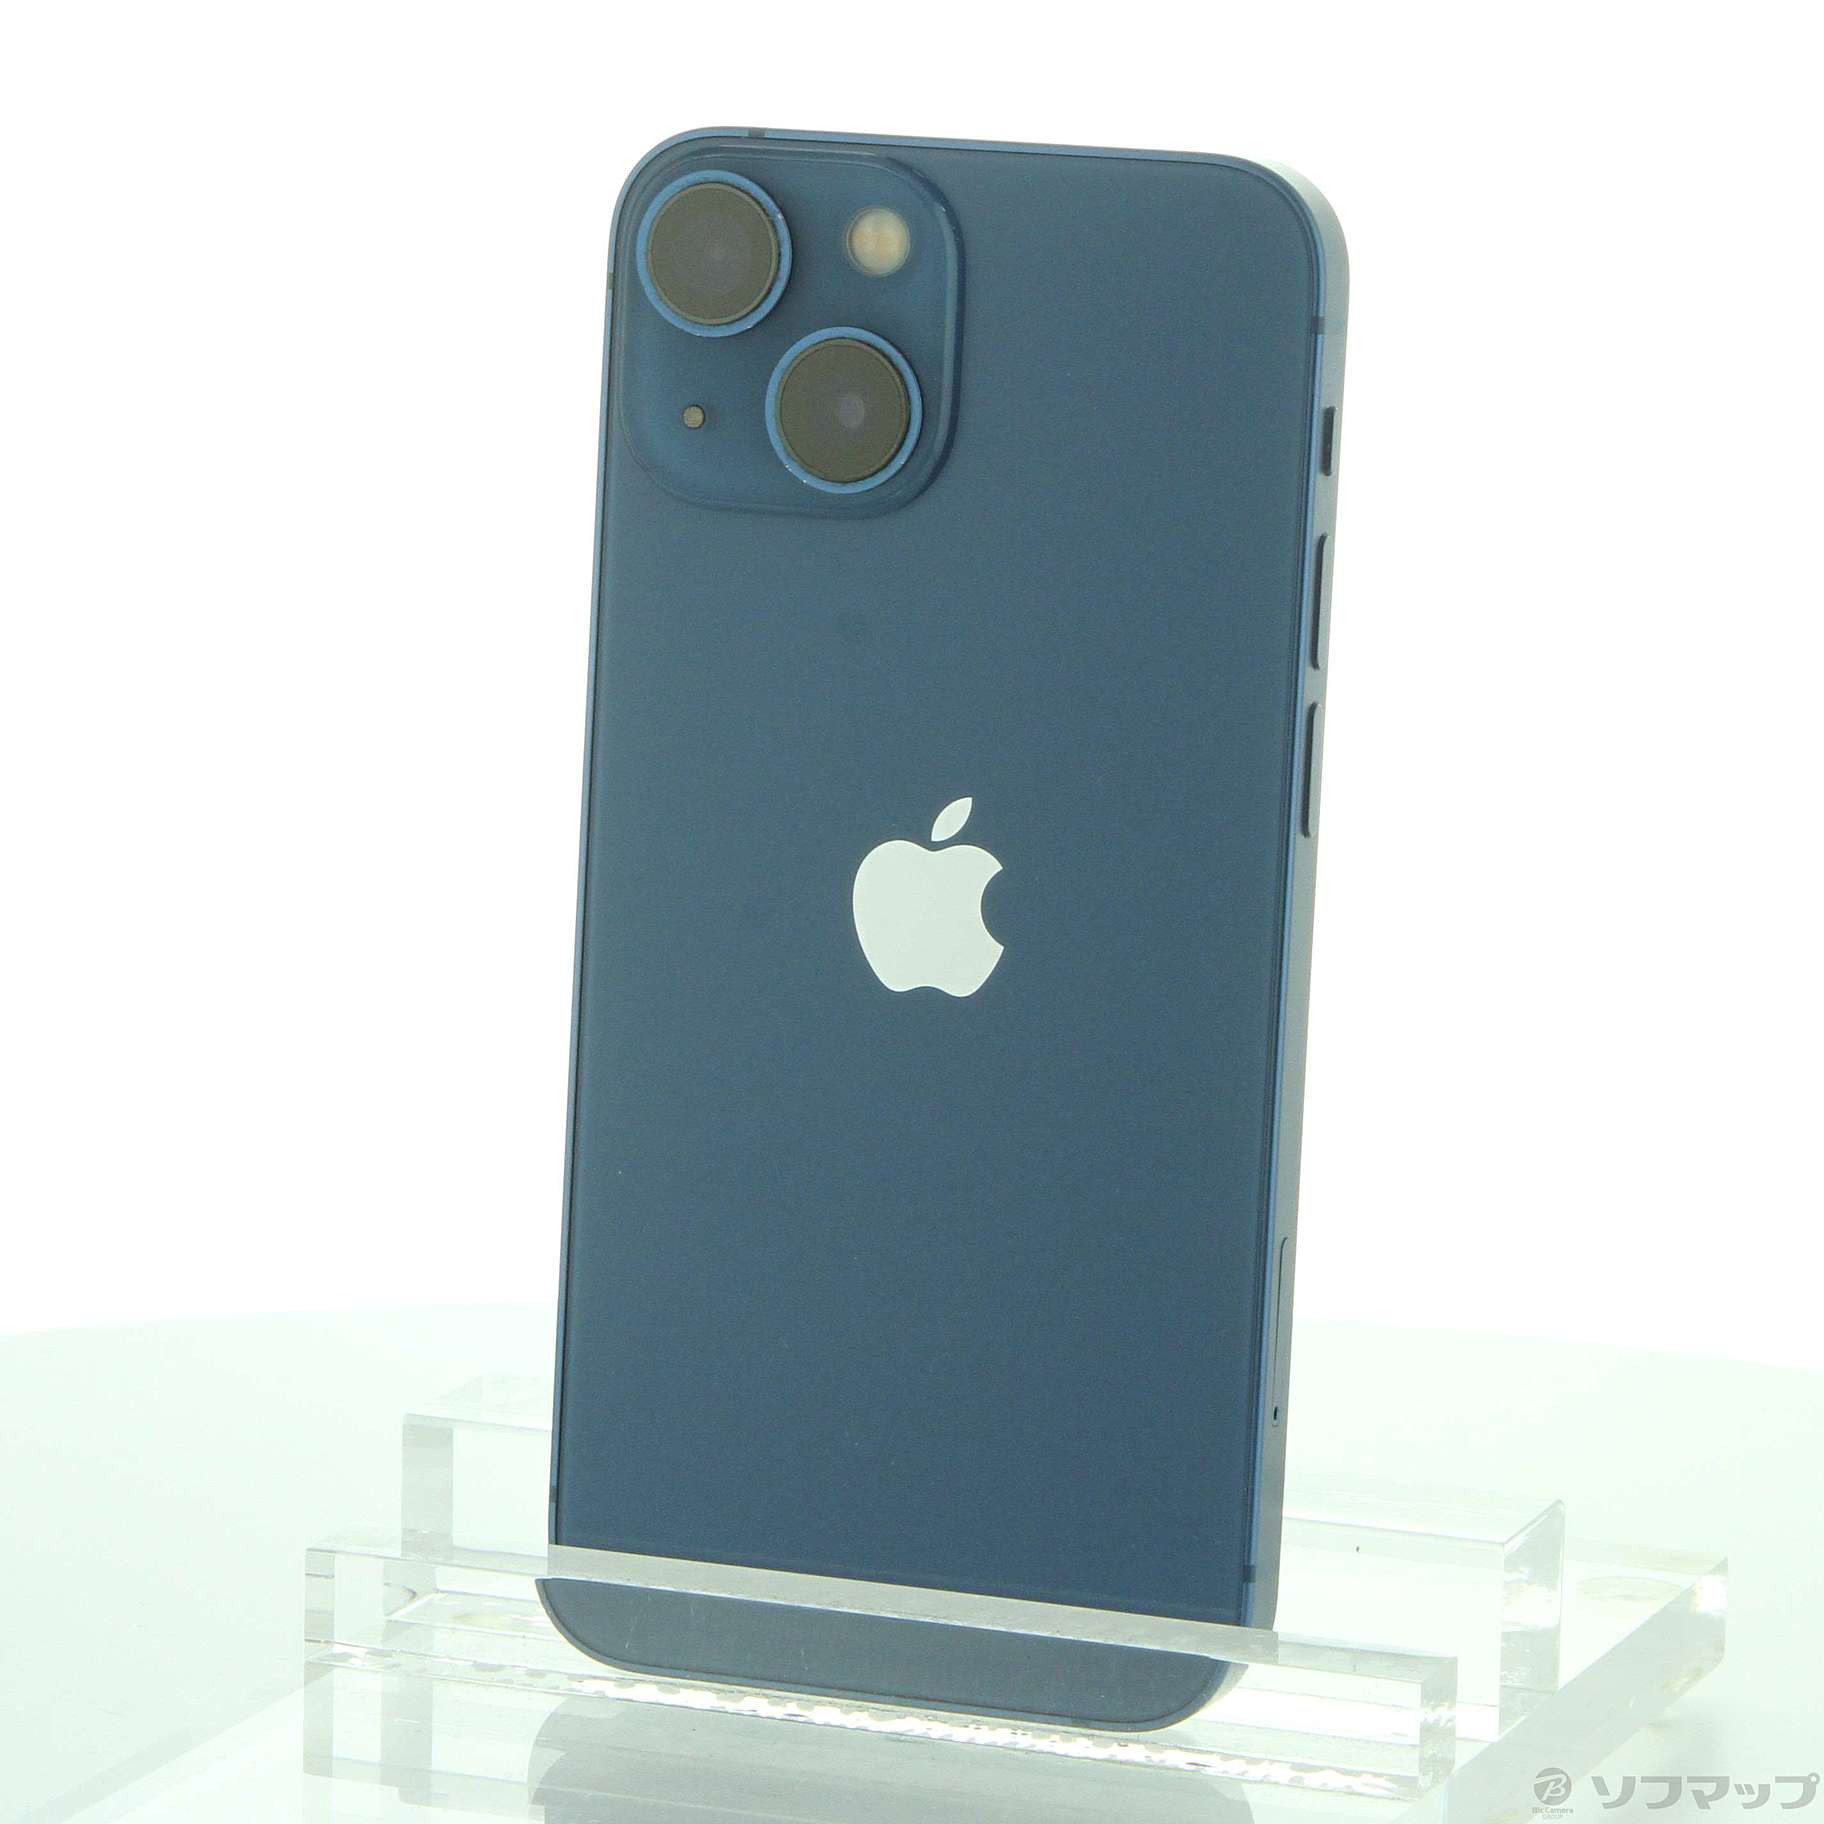 iPhone 13 mini 512GB SIMフリー [ブルー] 中古(白ロム)価格比較 